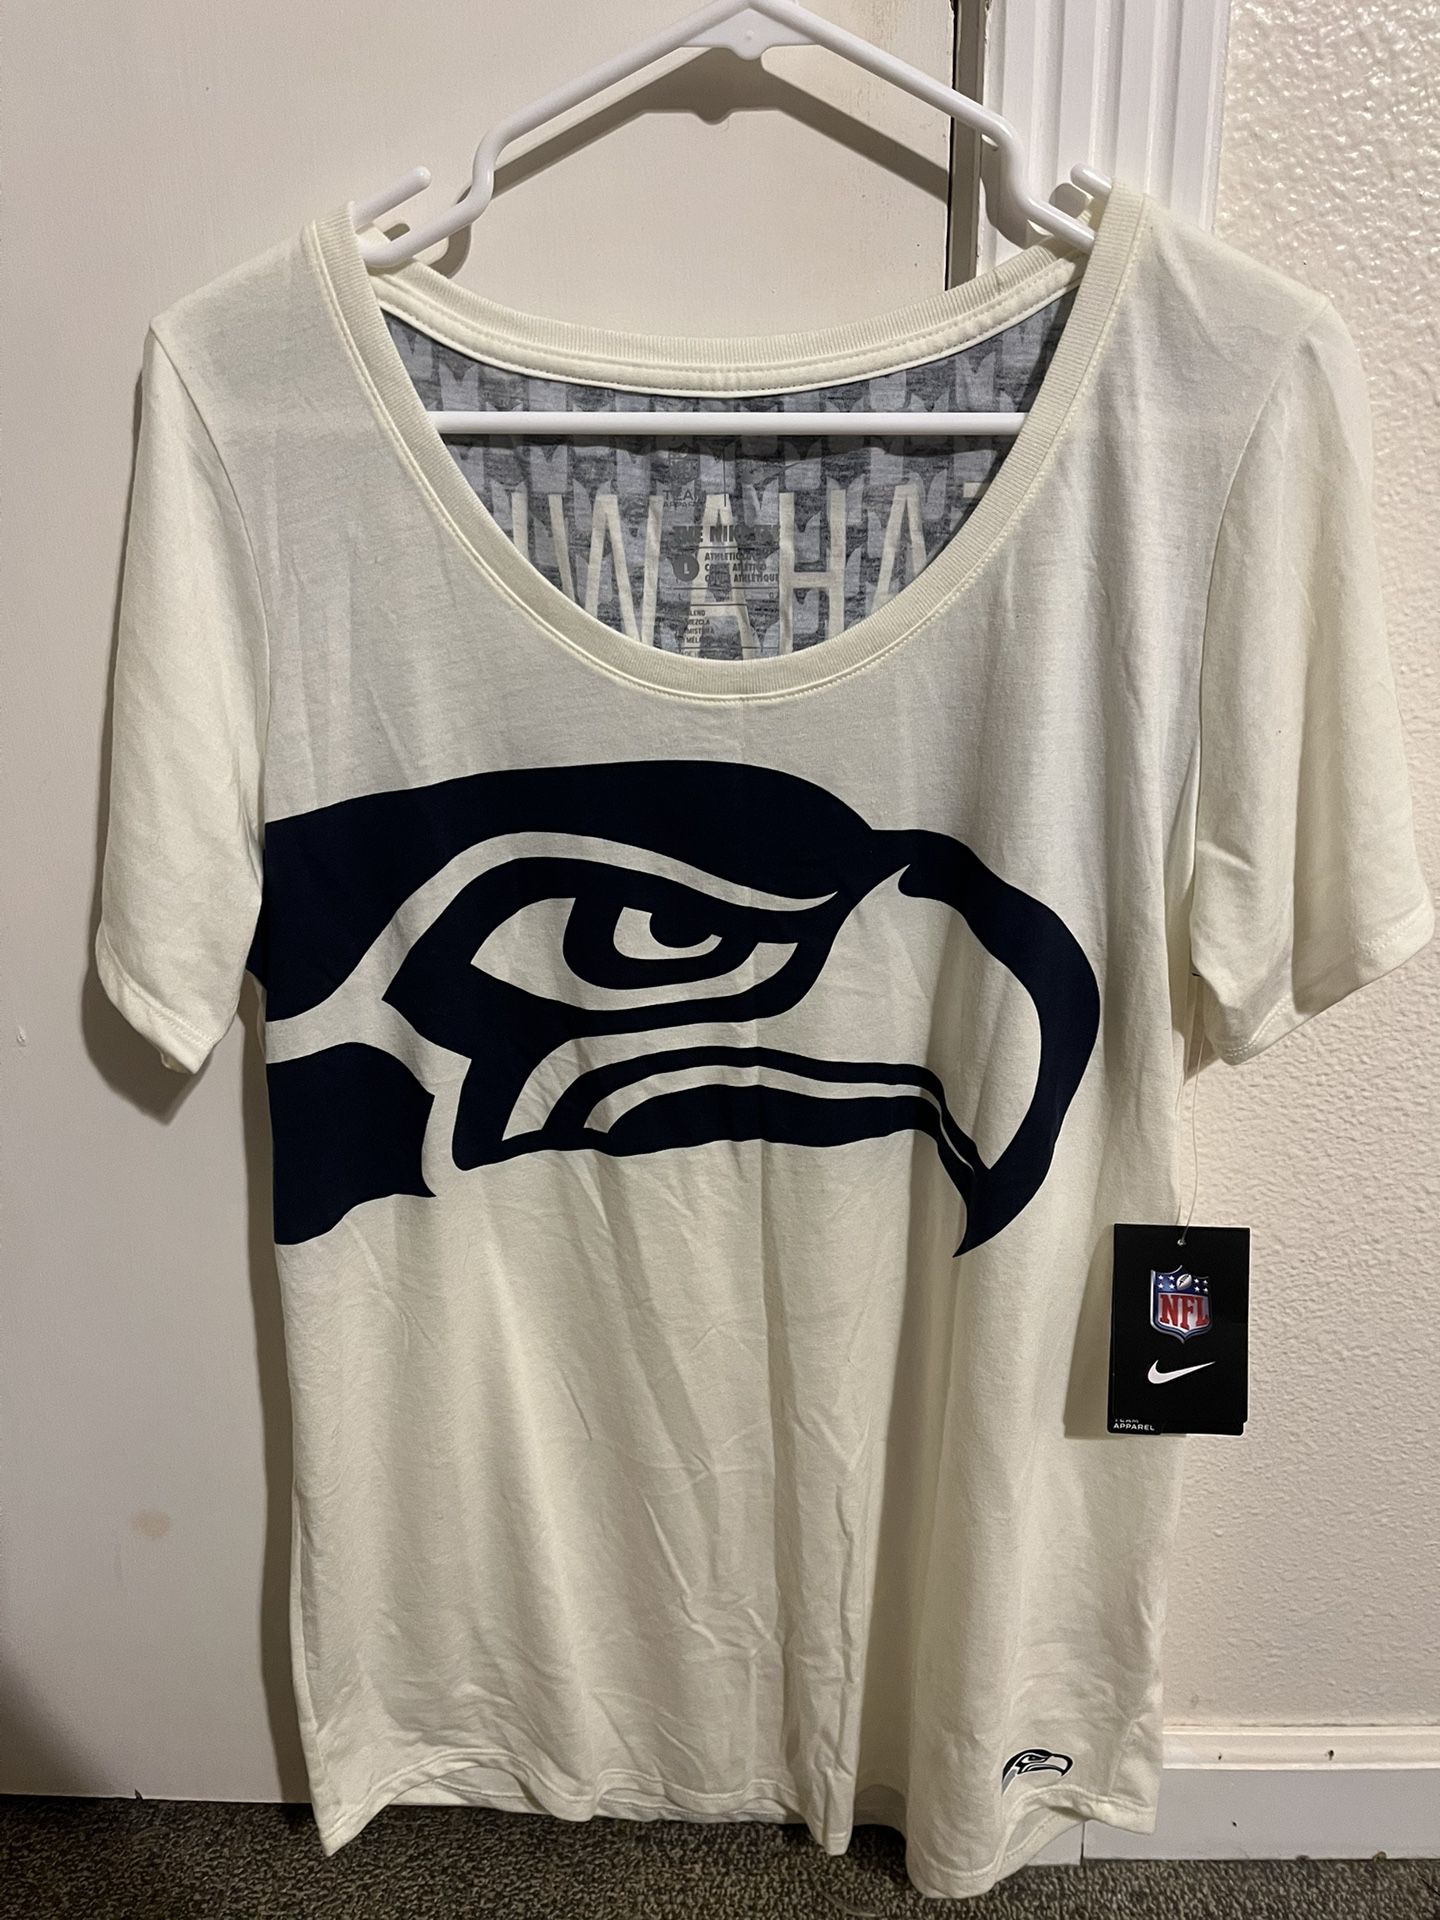 Women’s Seahawks shirt 